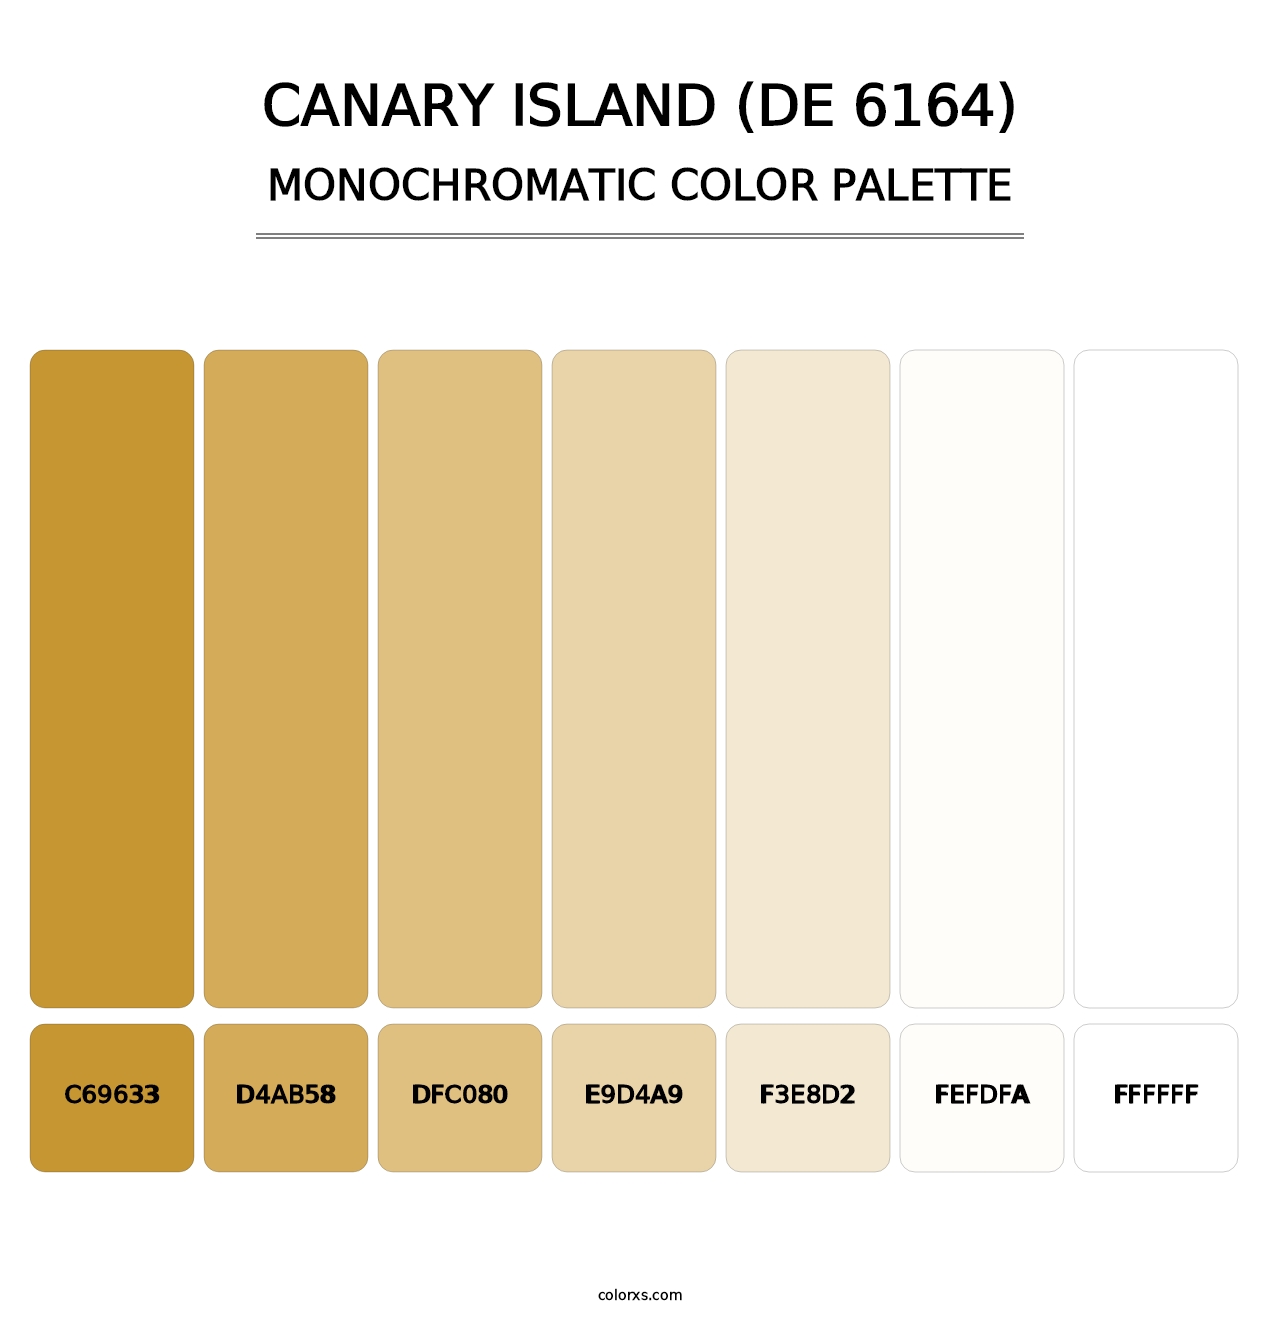 Canary Island (DE 6164) - Monochromatic Color Palette